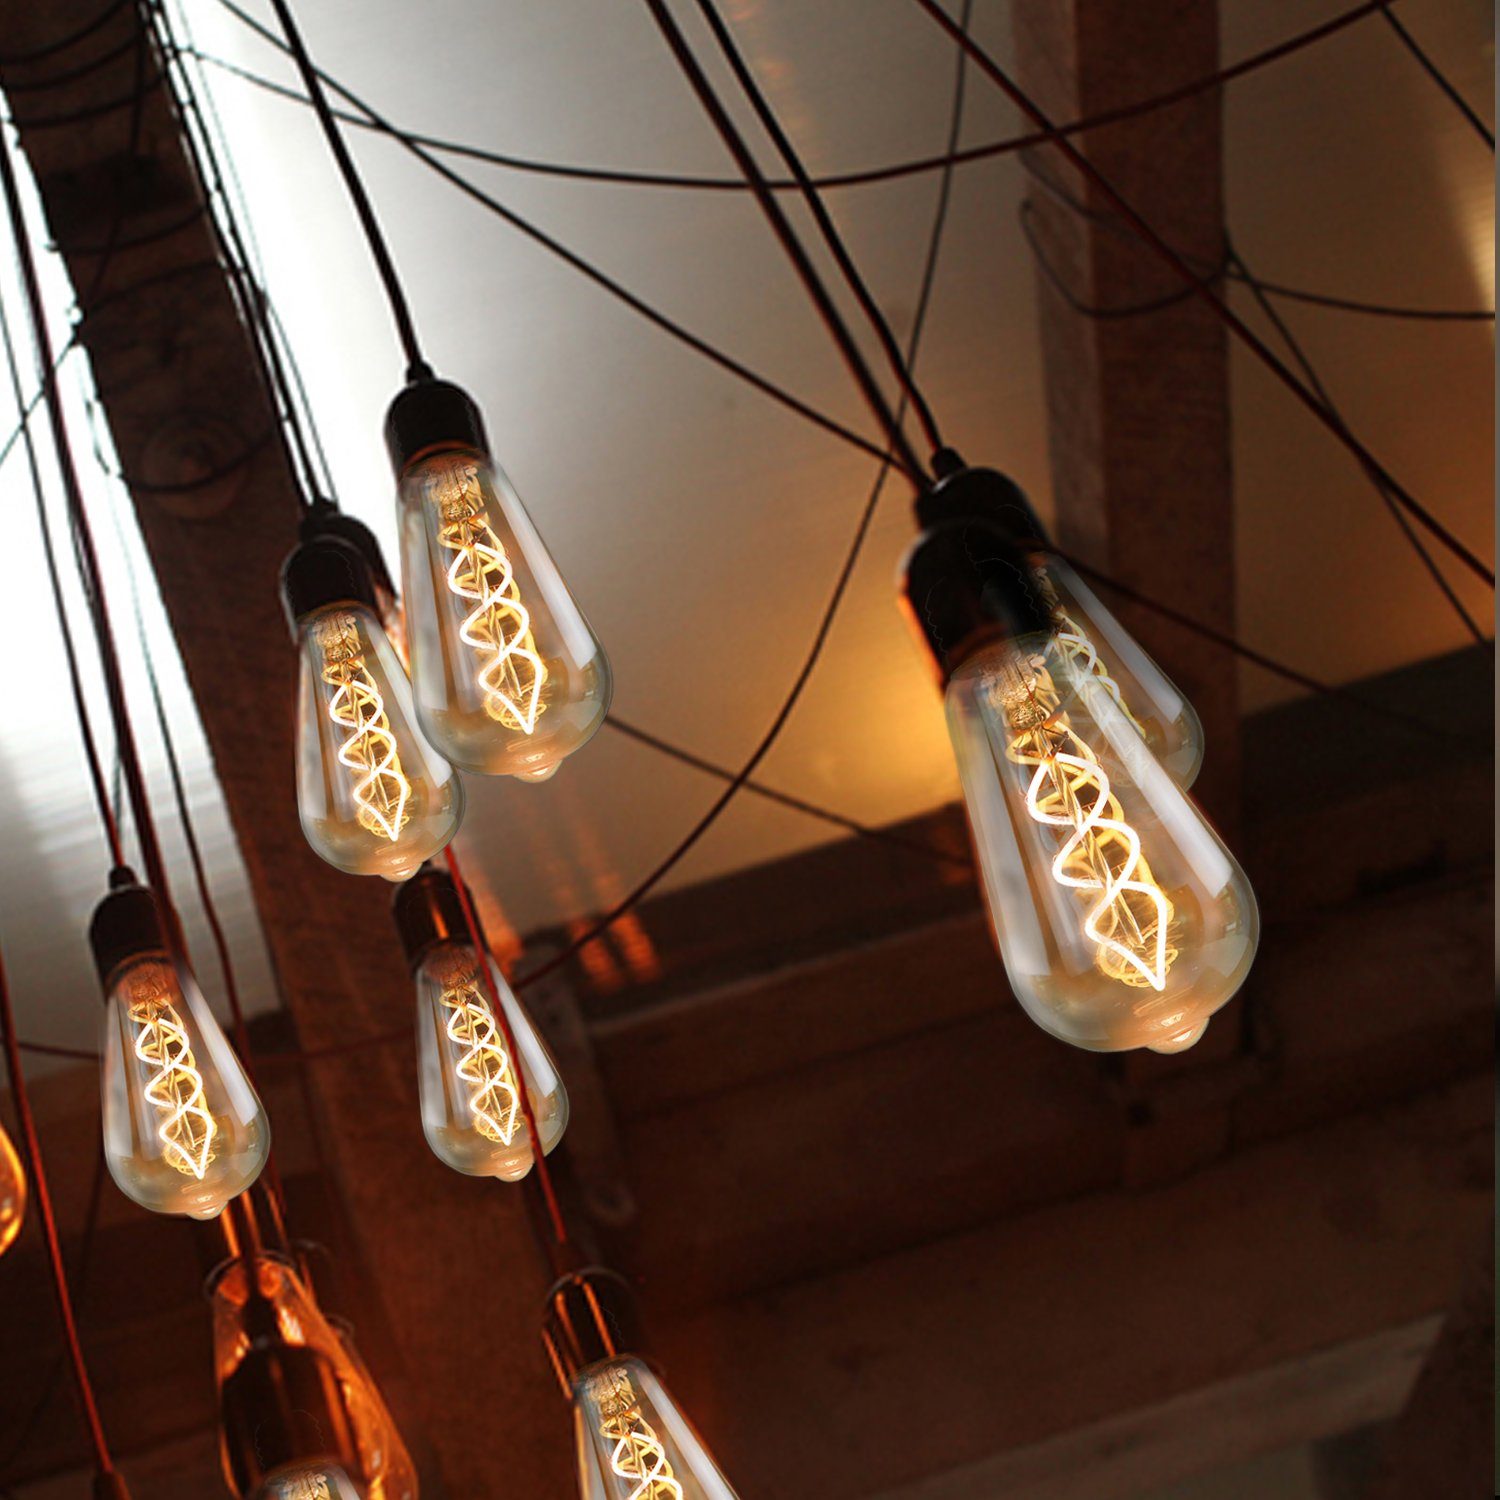 Beleuchtung, LED-Leuchtmittel ZMH 2200K ST64 Vintage warmweiß, Glühlampe E27, 1 St., warmweiß 4W Filament